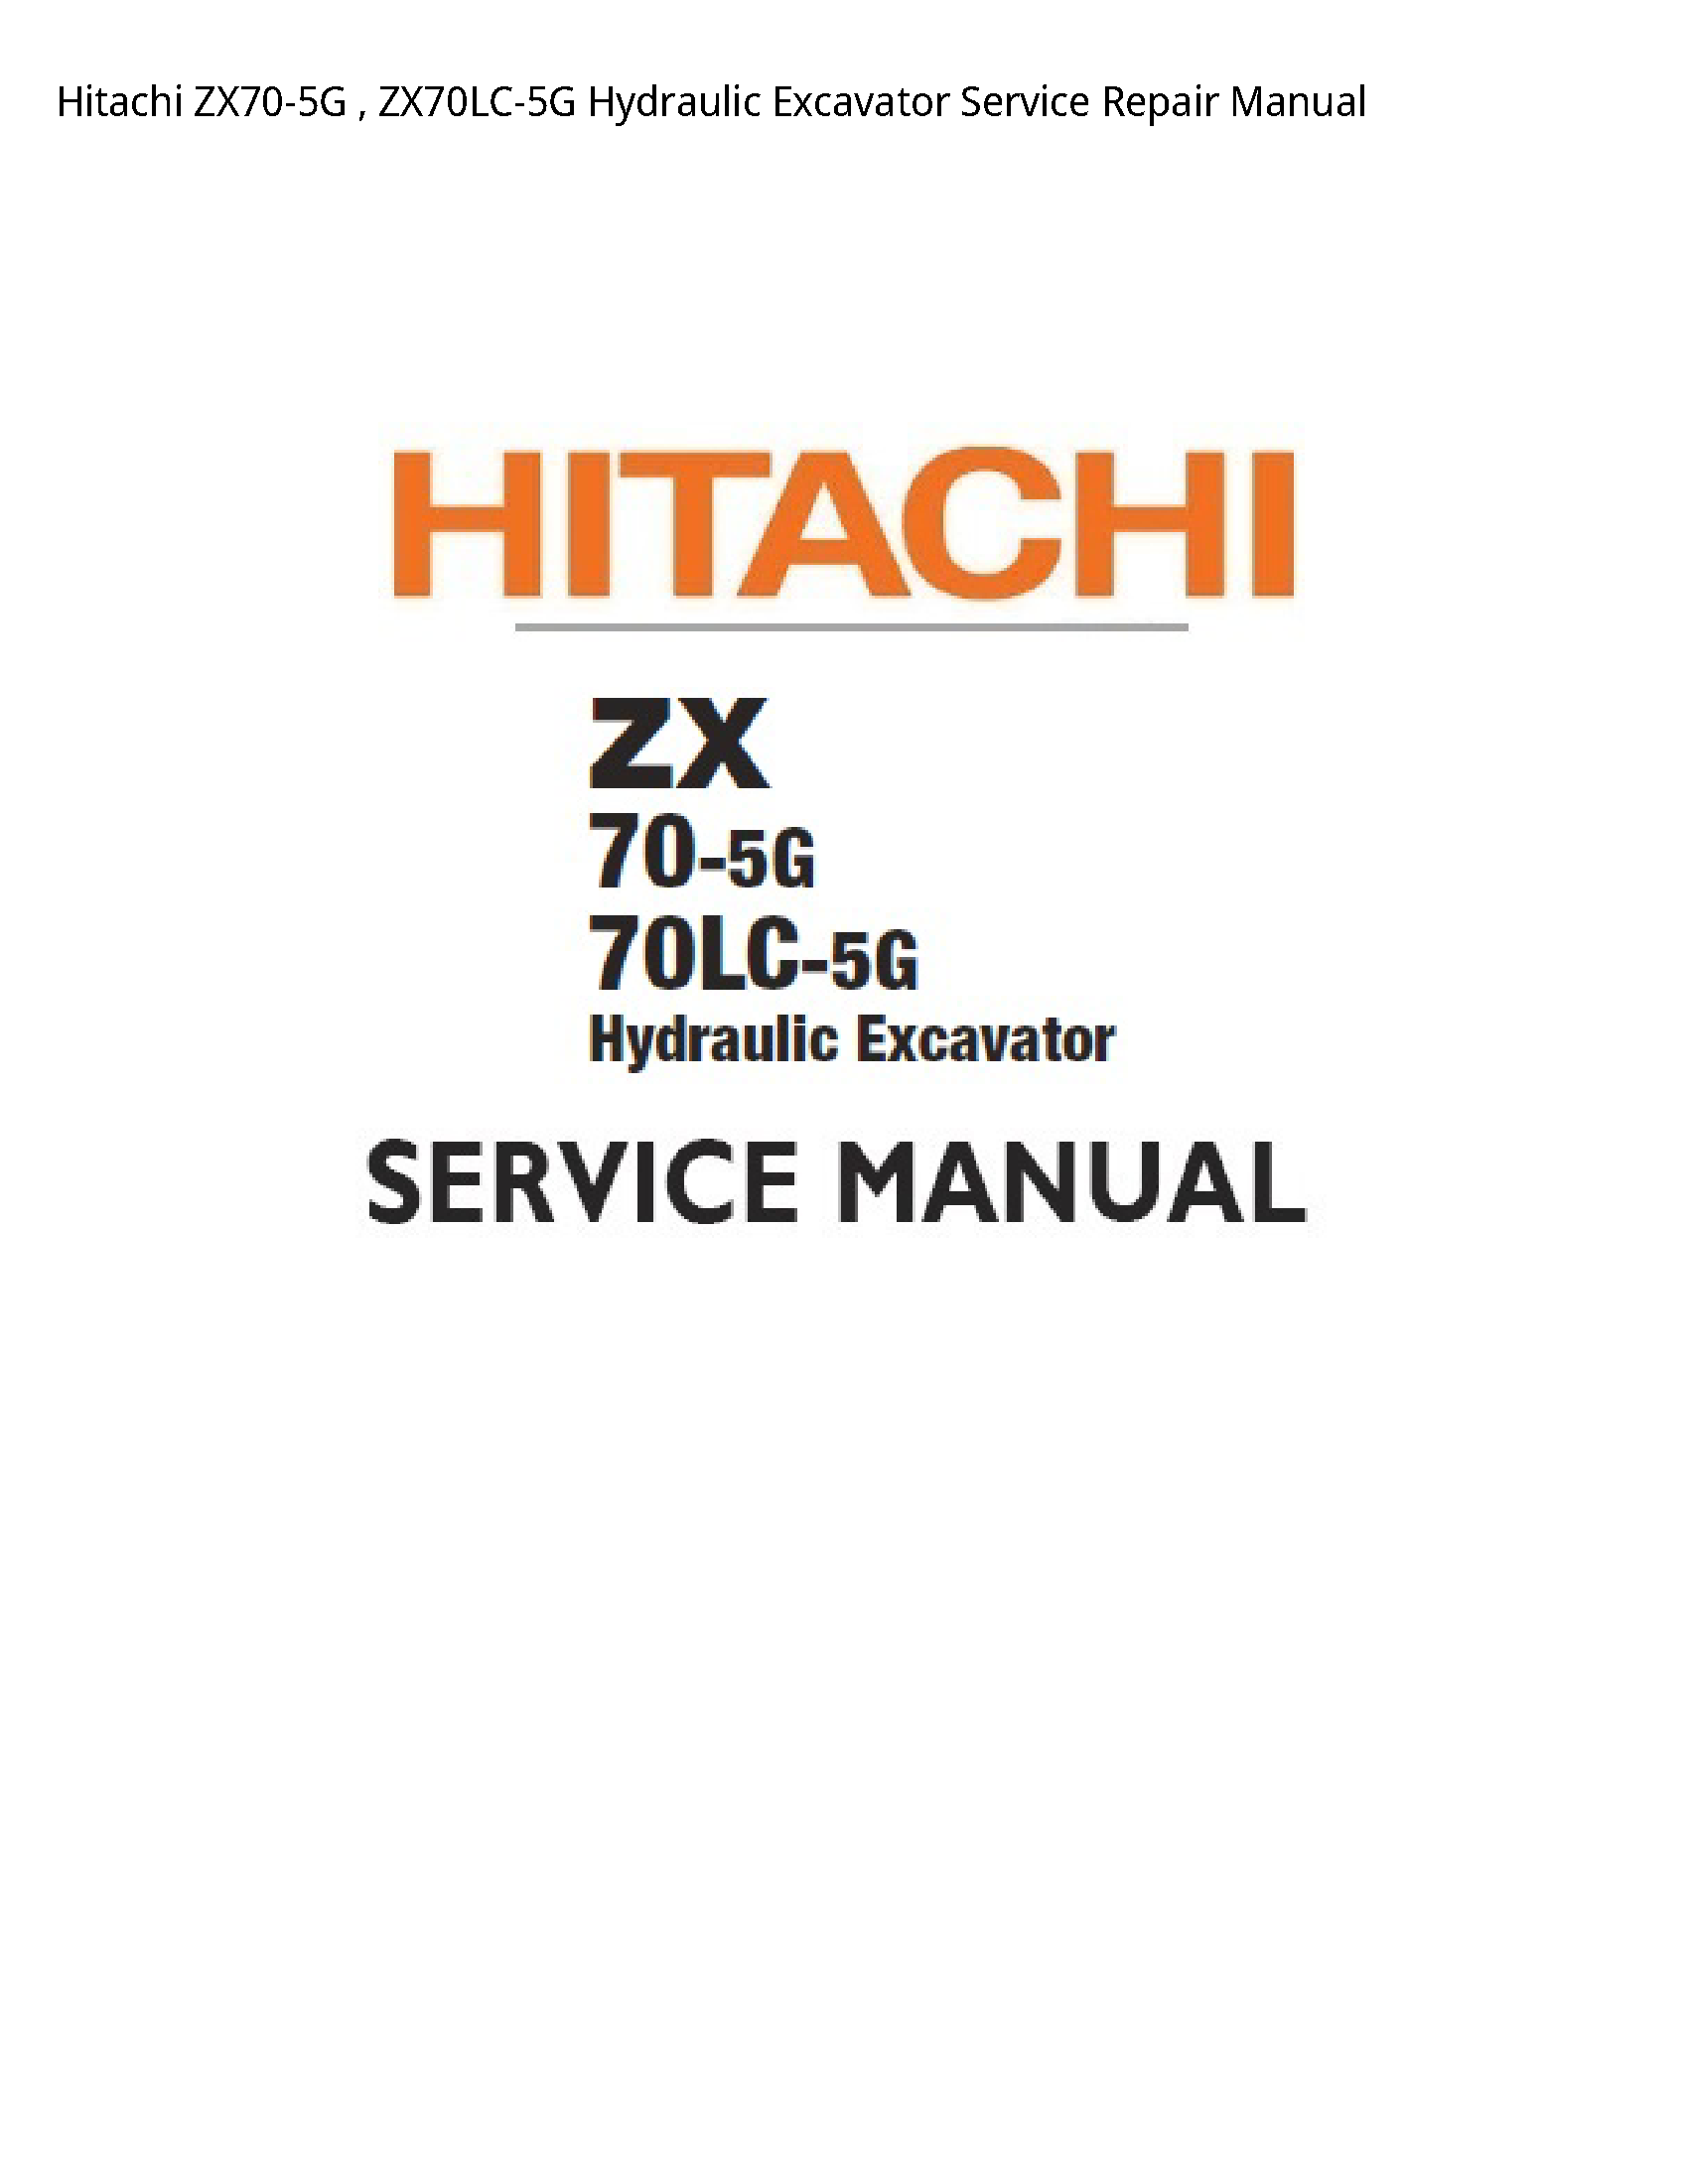 Hitachi ZX70-5G Hydraulic Excavator manual